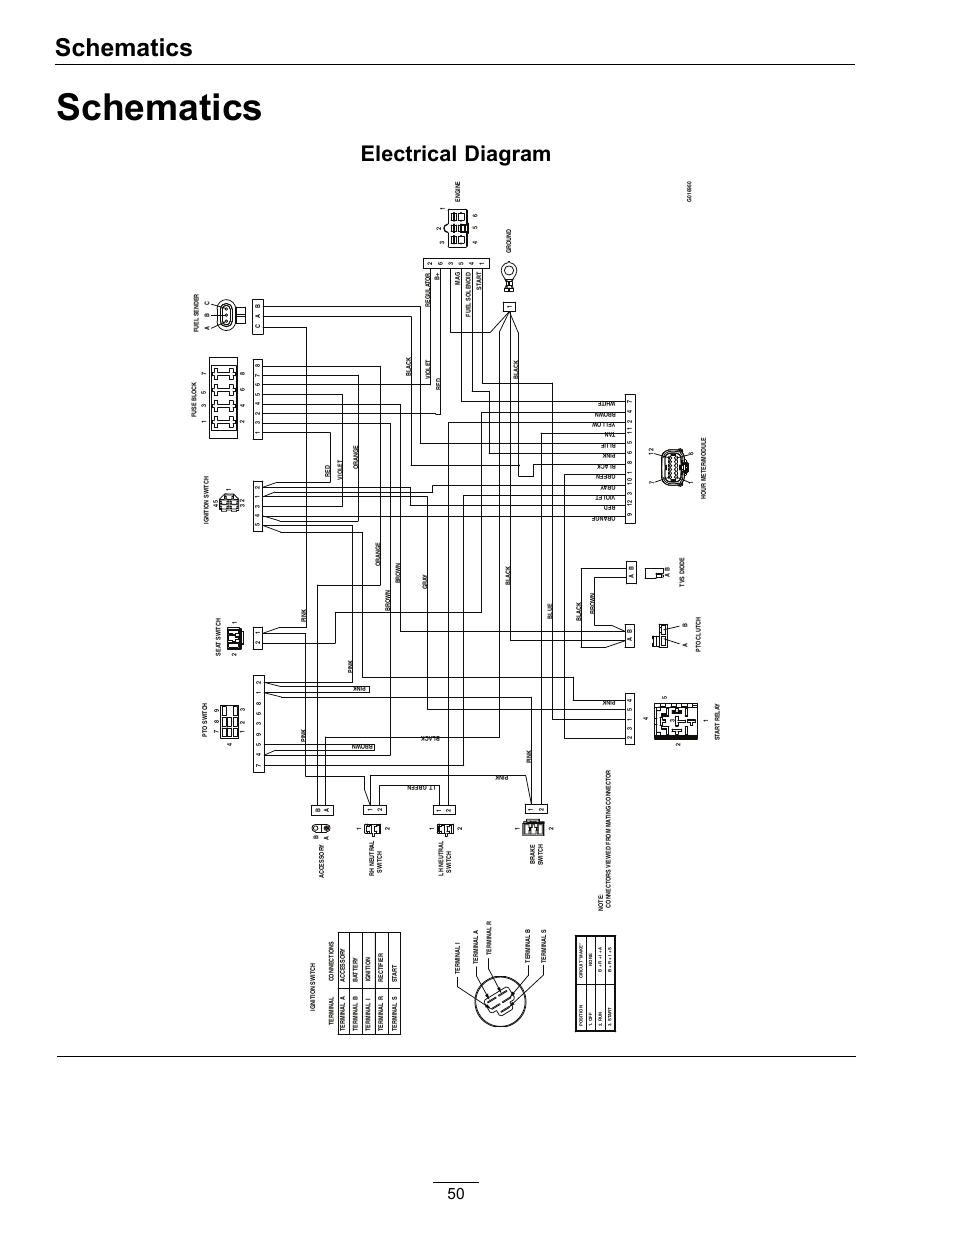 1962 cub cadet wiring diagram